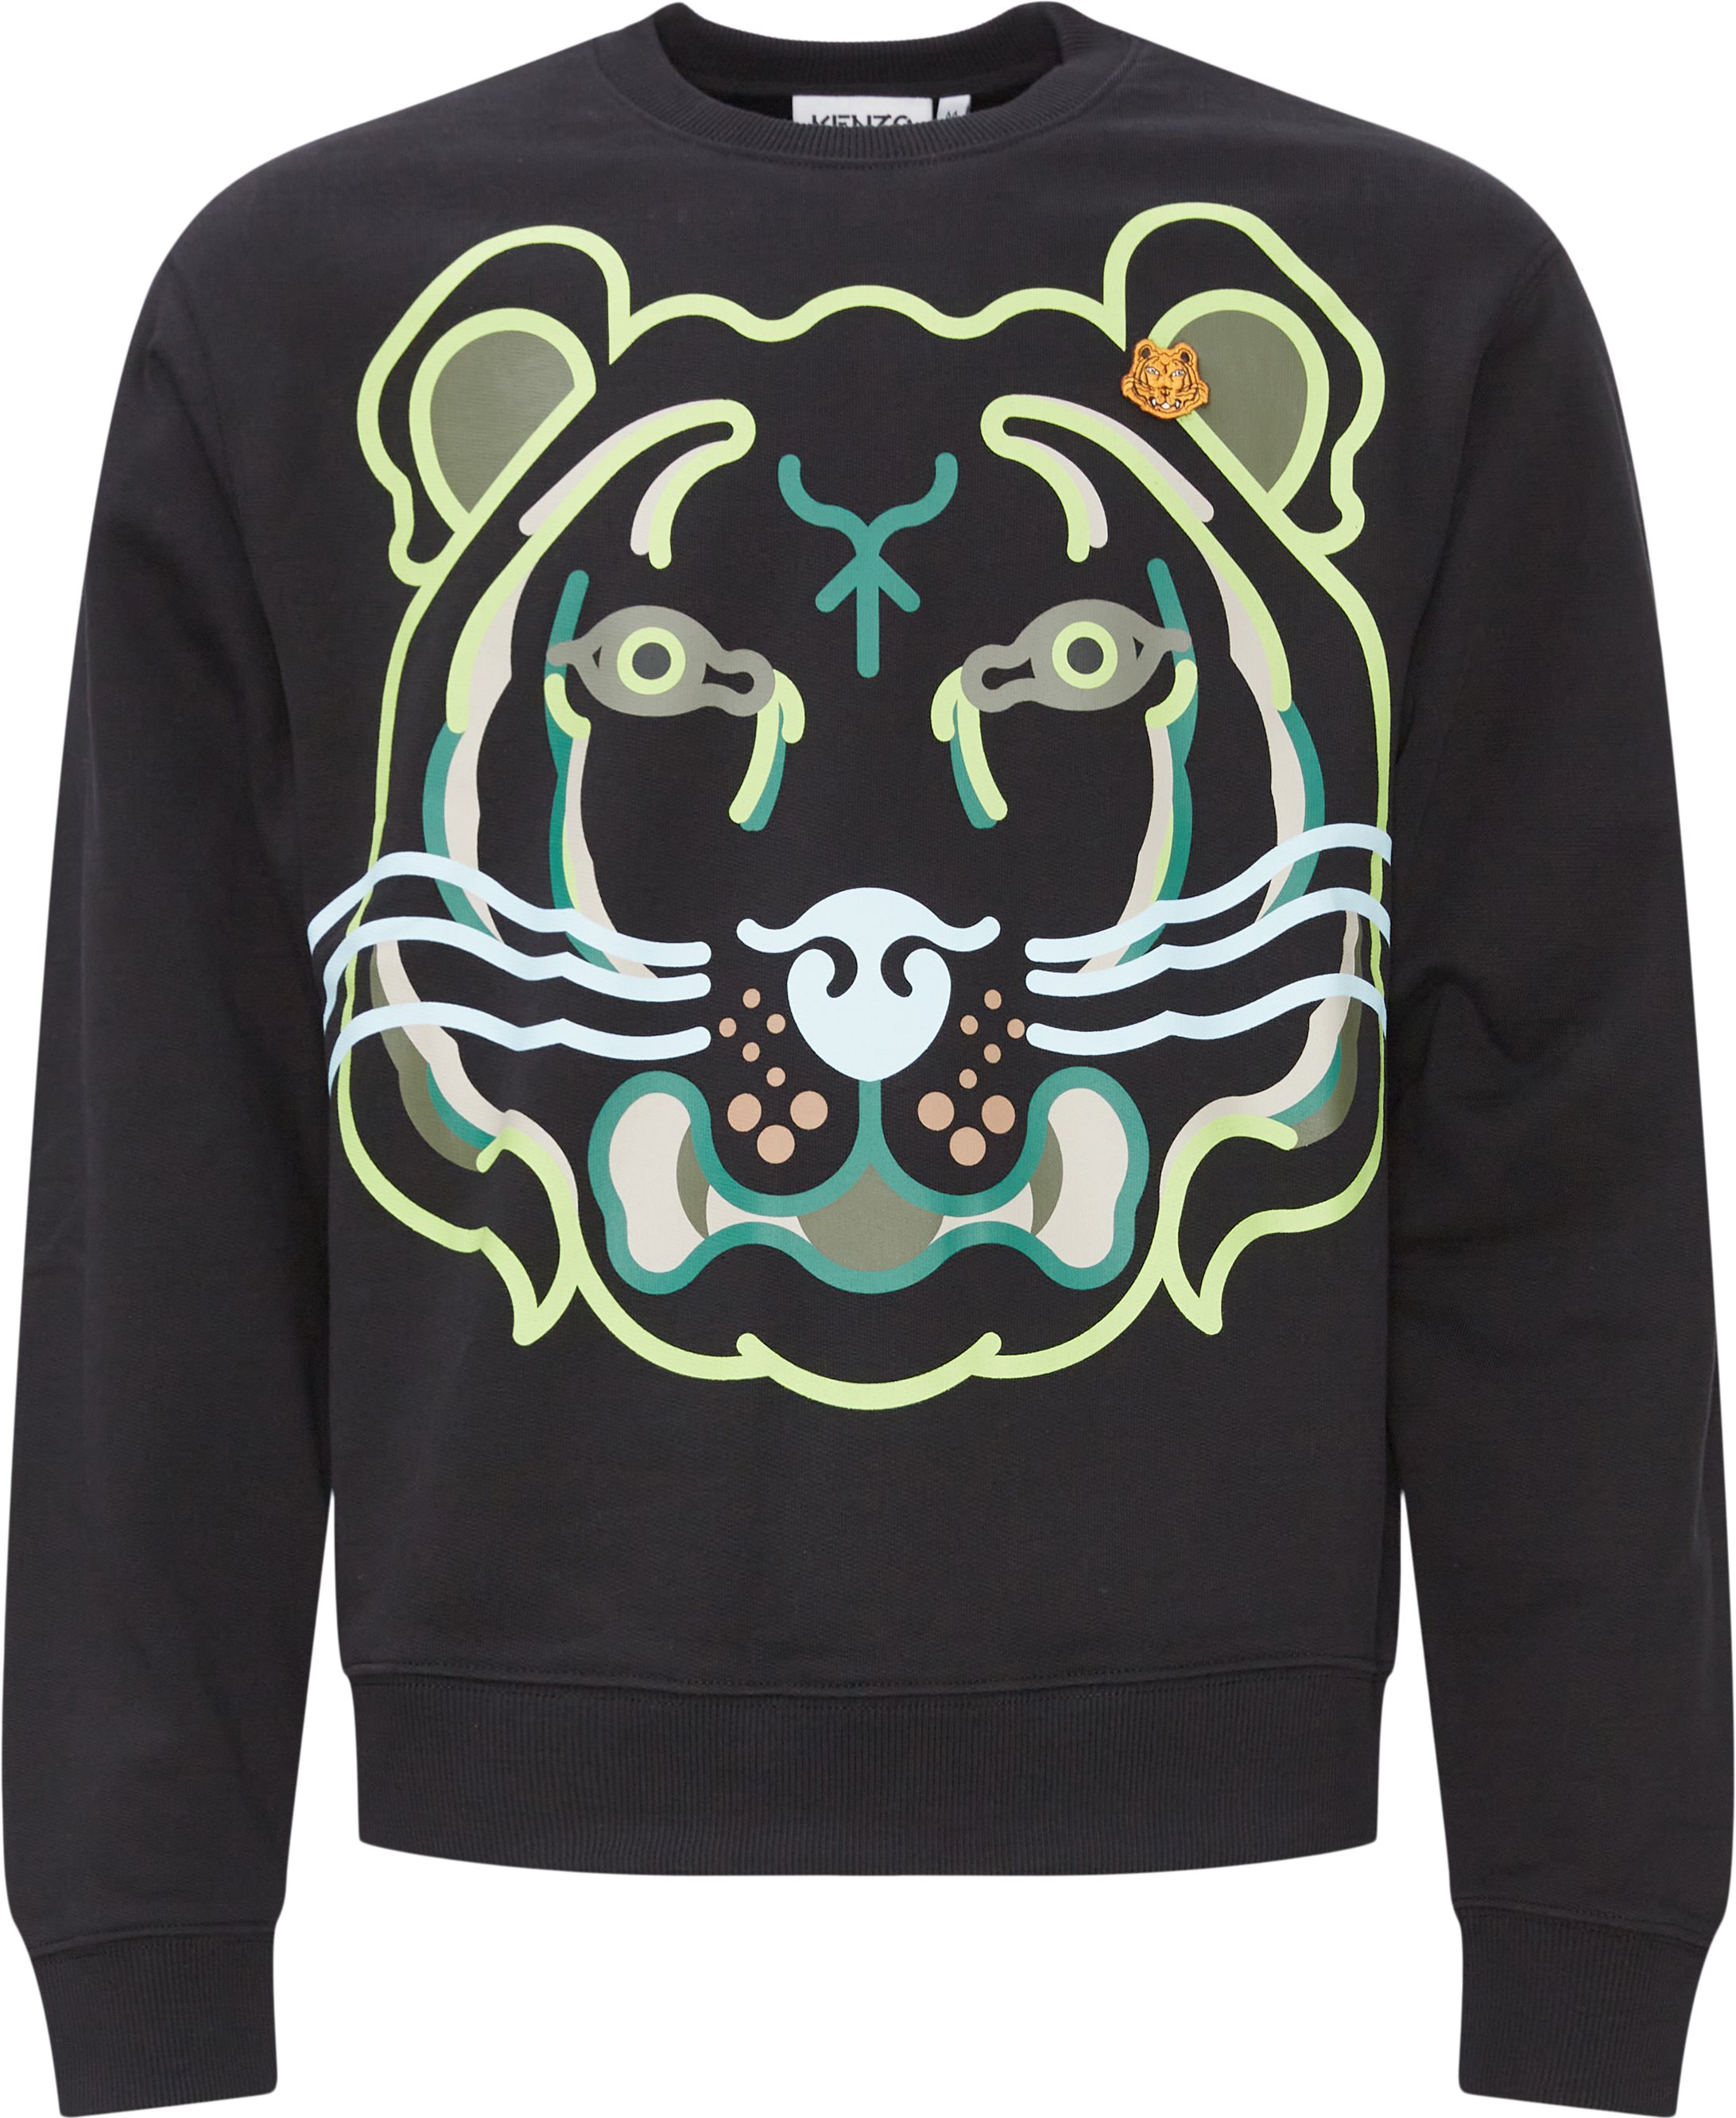 K-Tiger Classic Sweatshirt - Sweatshirts - Regular fit - Black